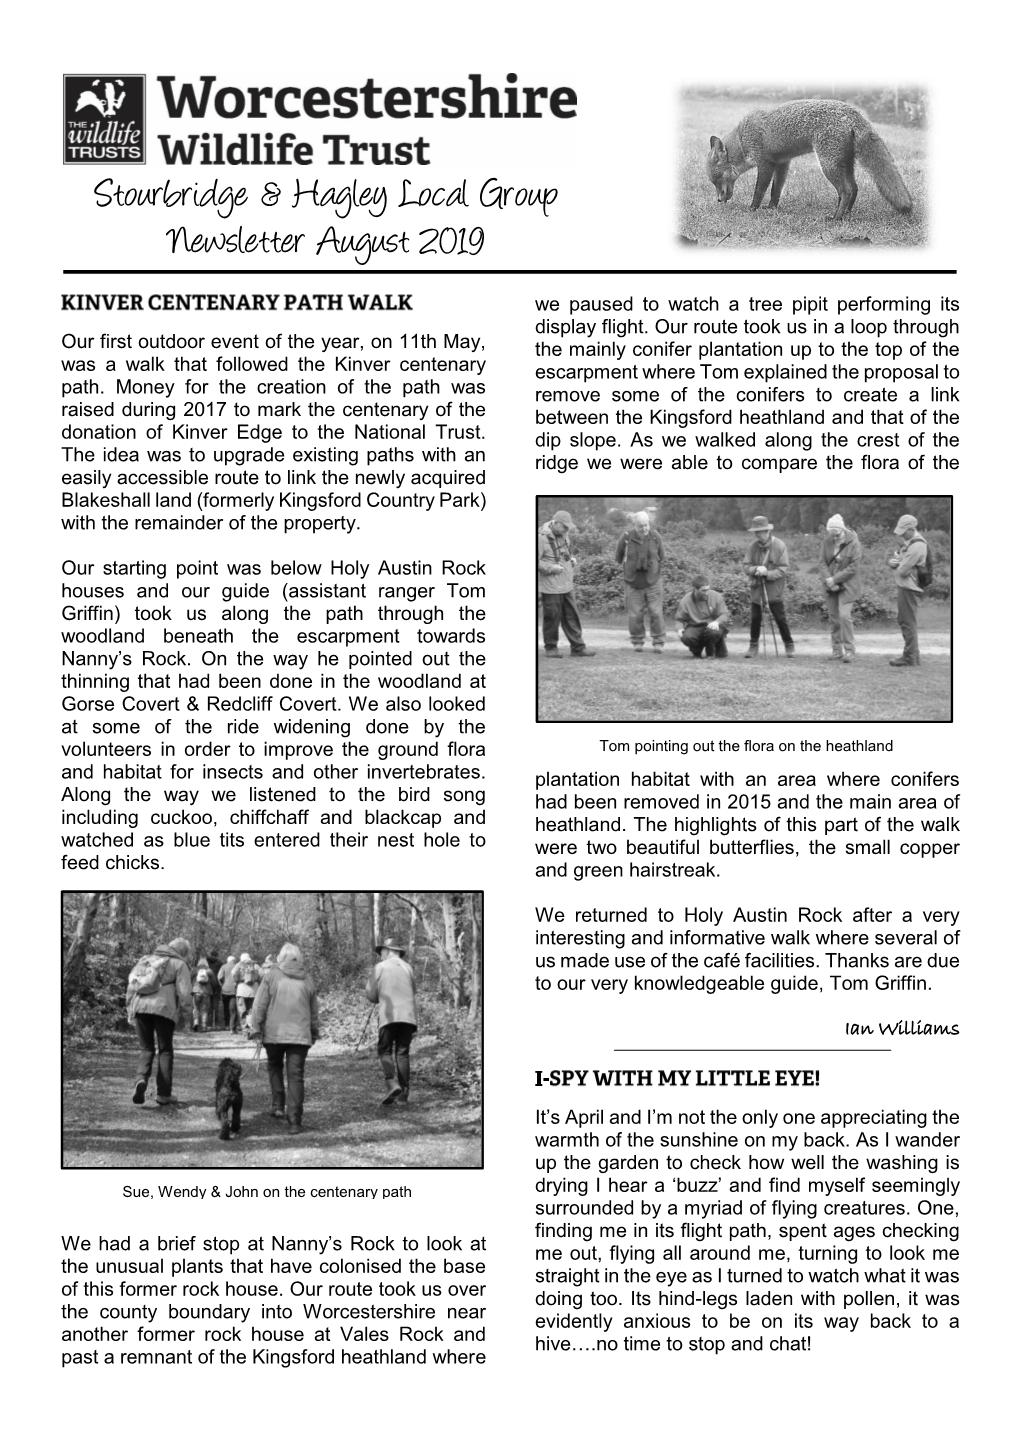 Stourbridge & Hagley Local Group Newsletter August 2019